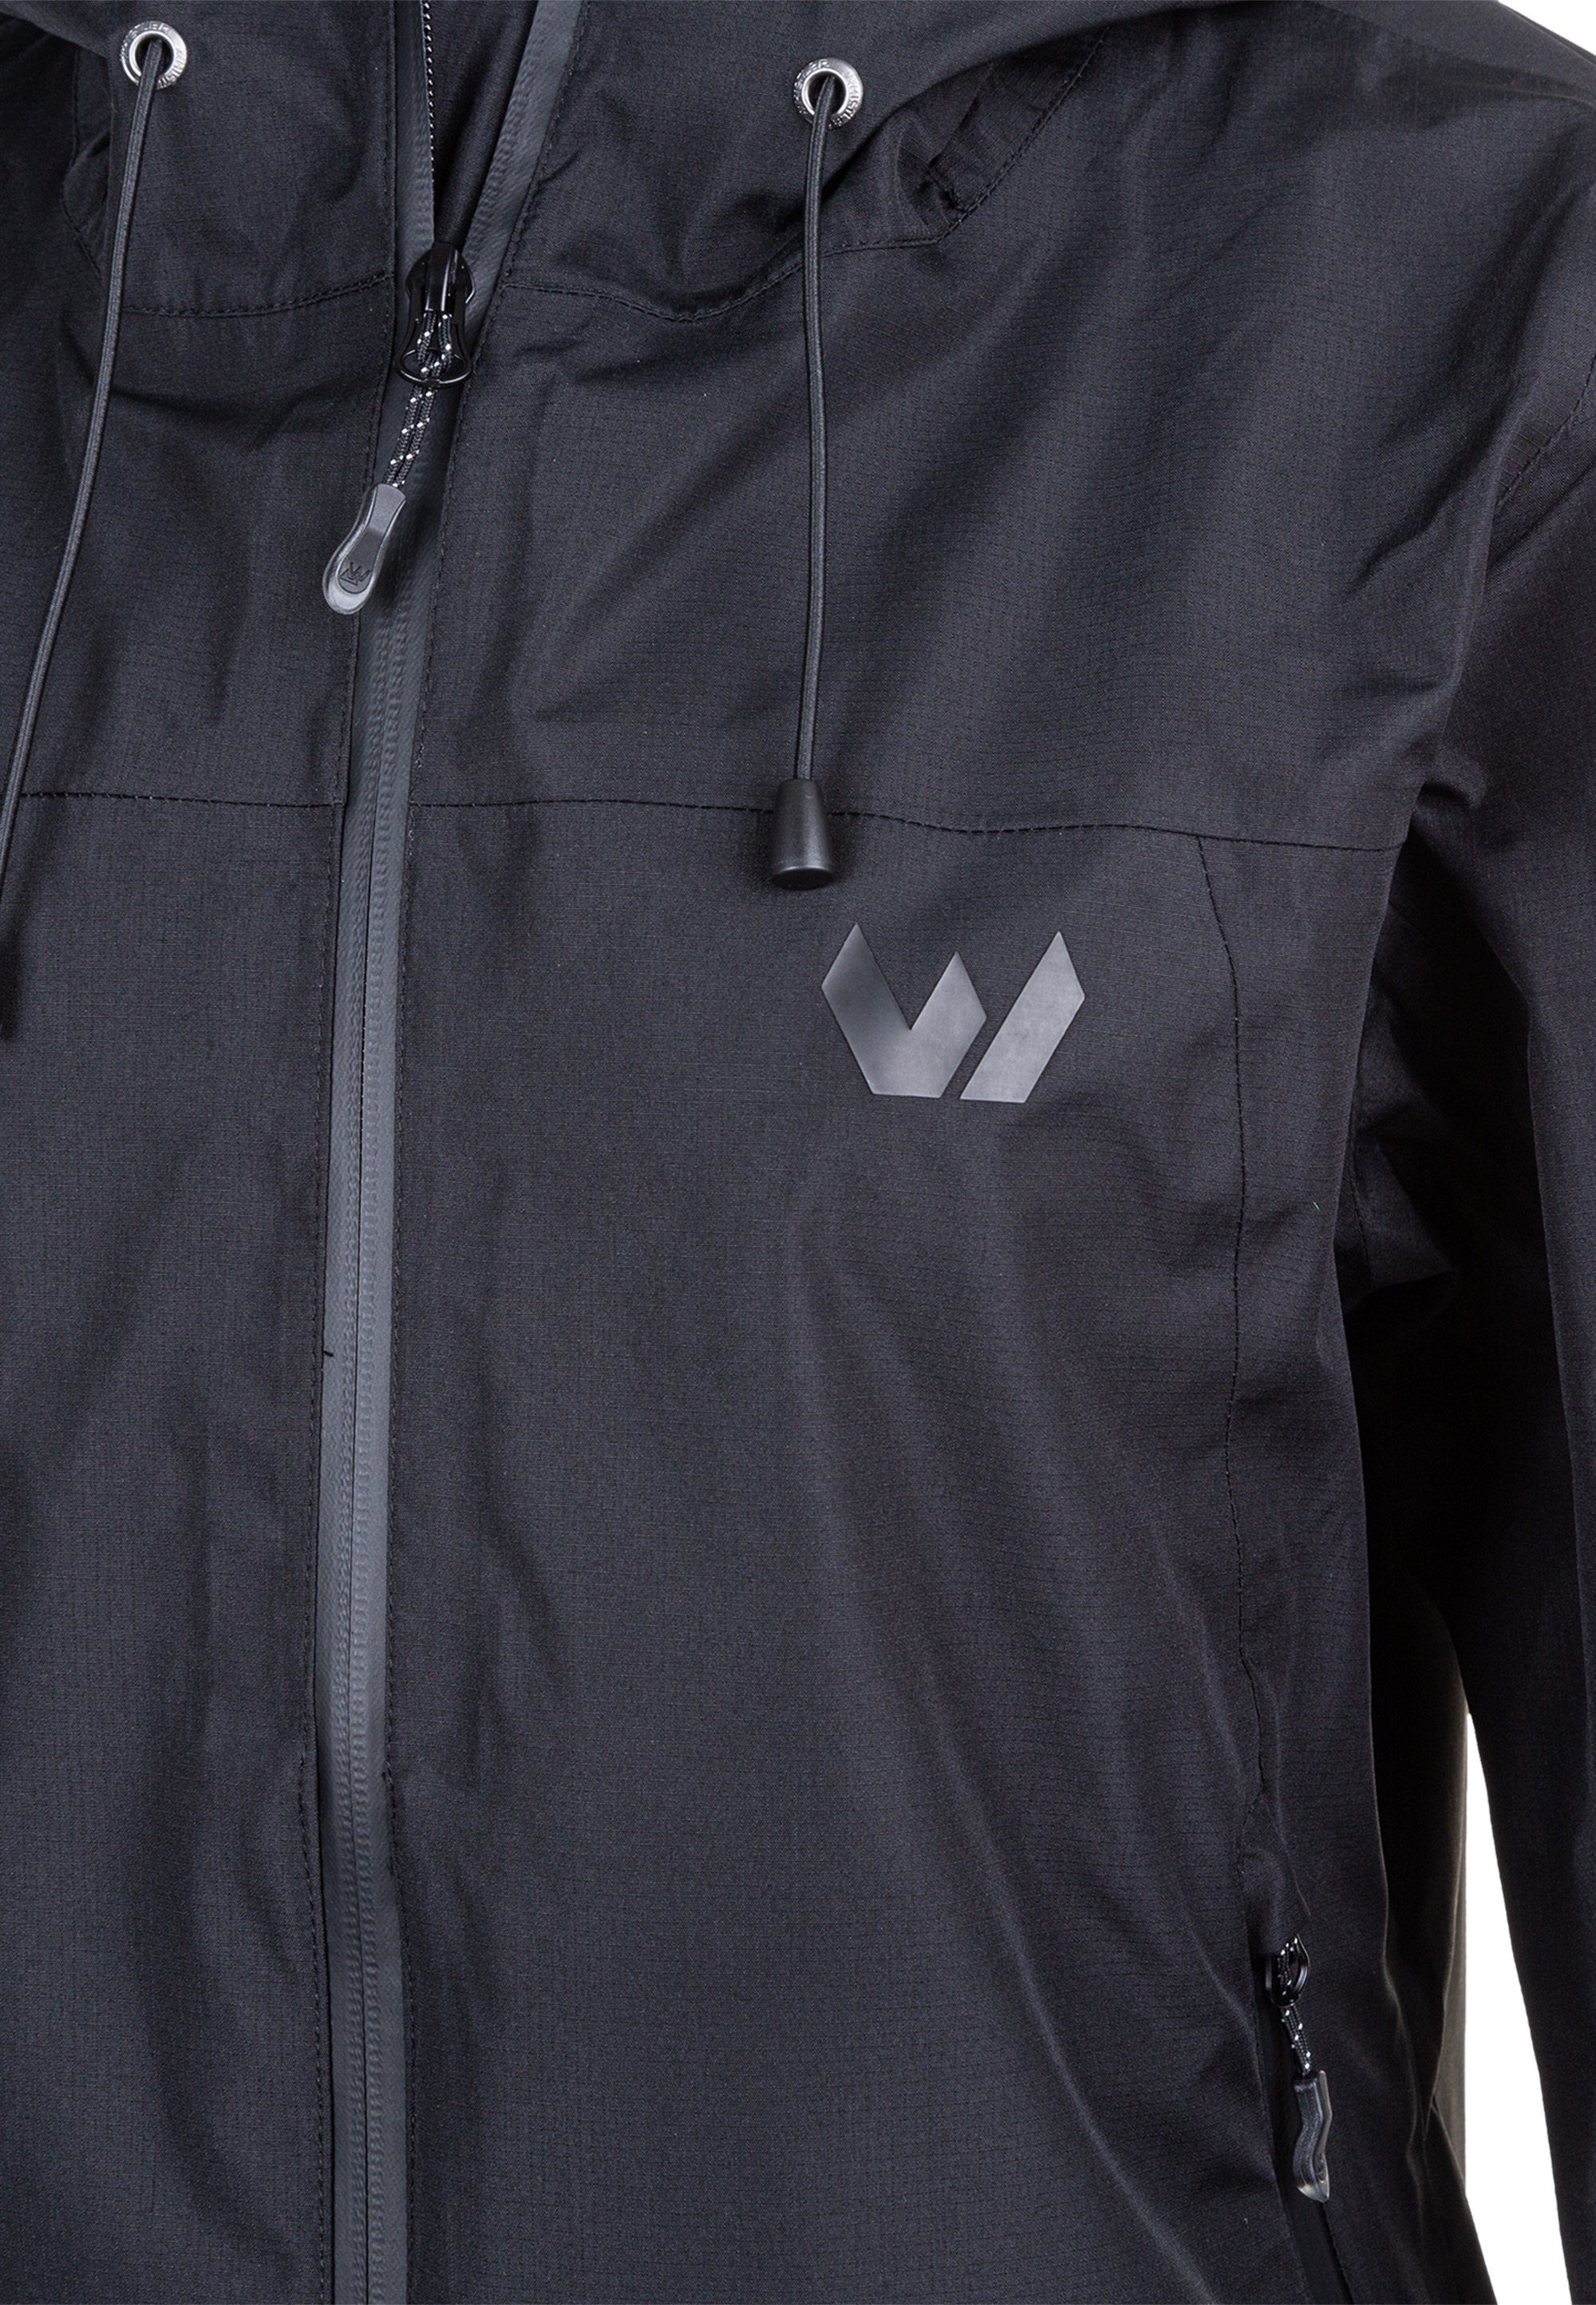 WHISTLER Softshelljacke BROOK W Shell W-PRO schwarz Jacket mit praktischer 15000 Kapuze